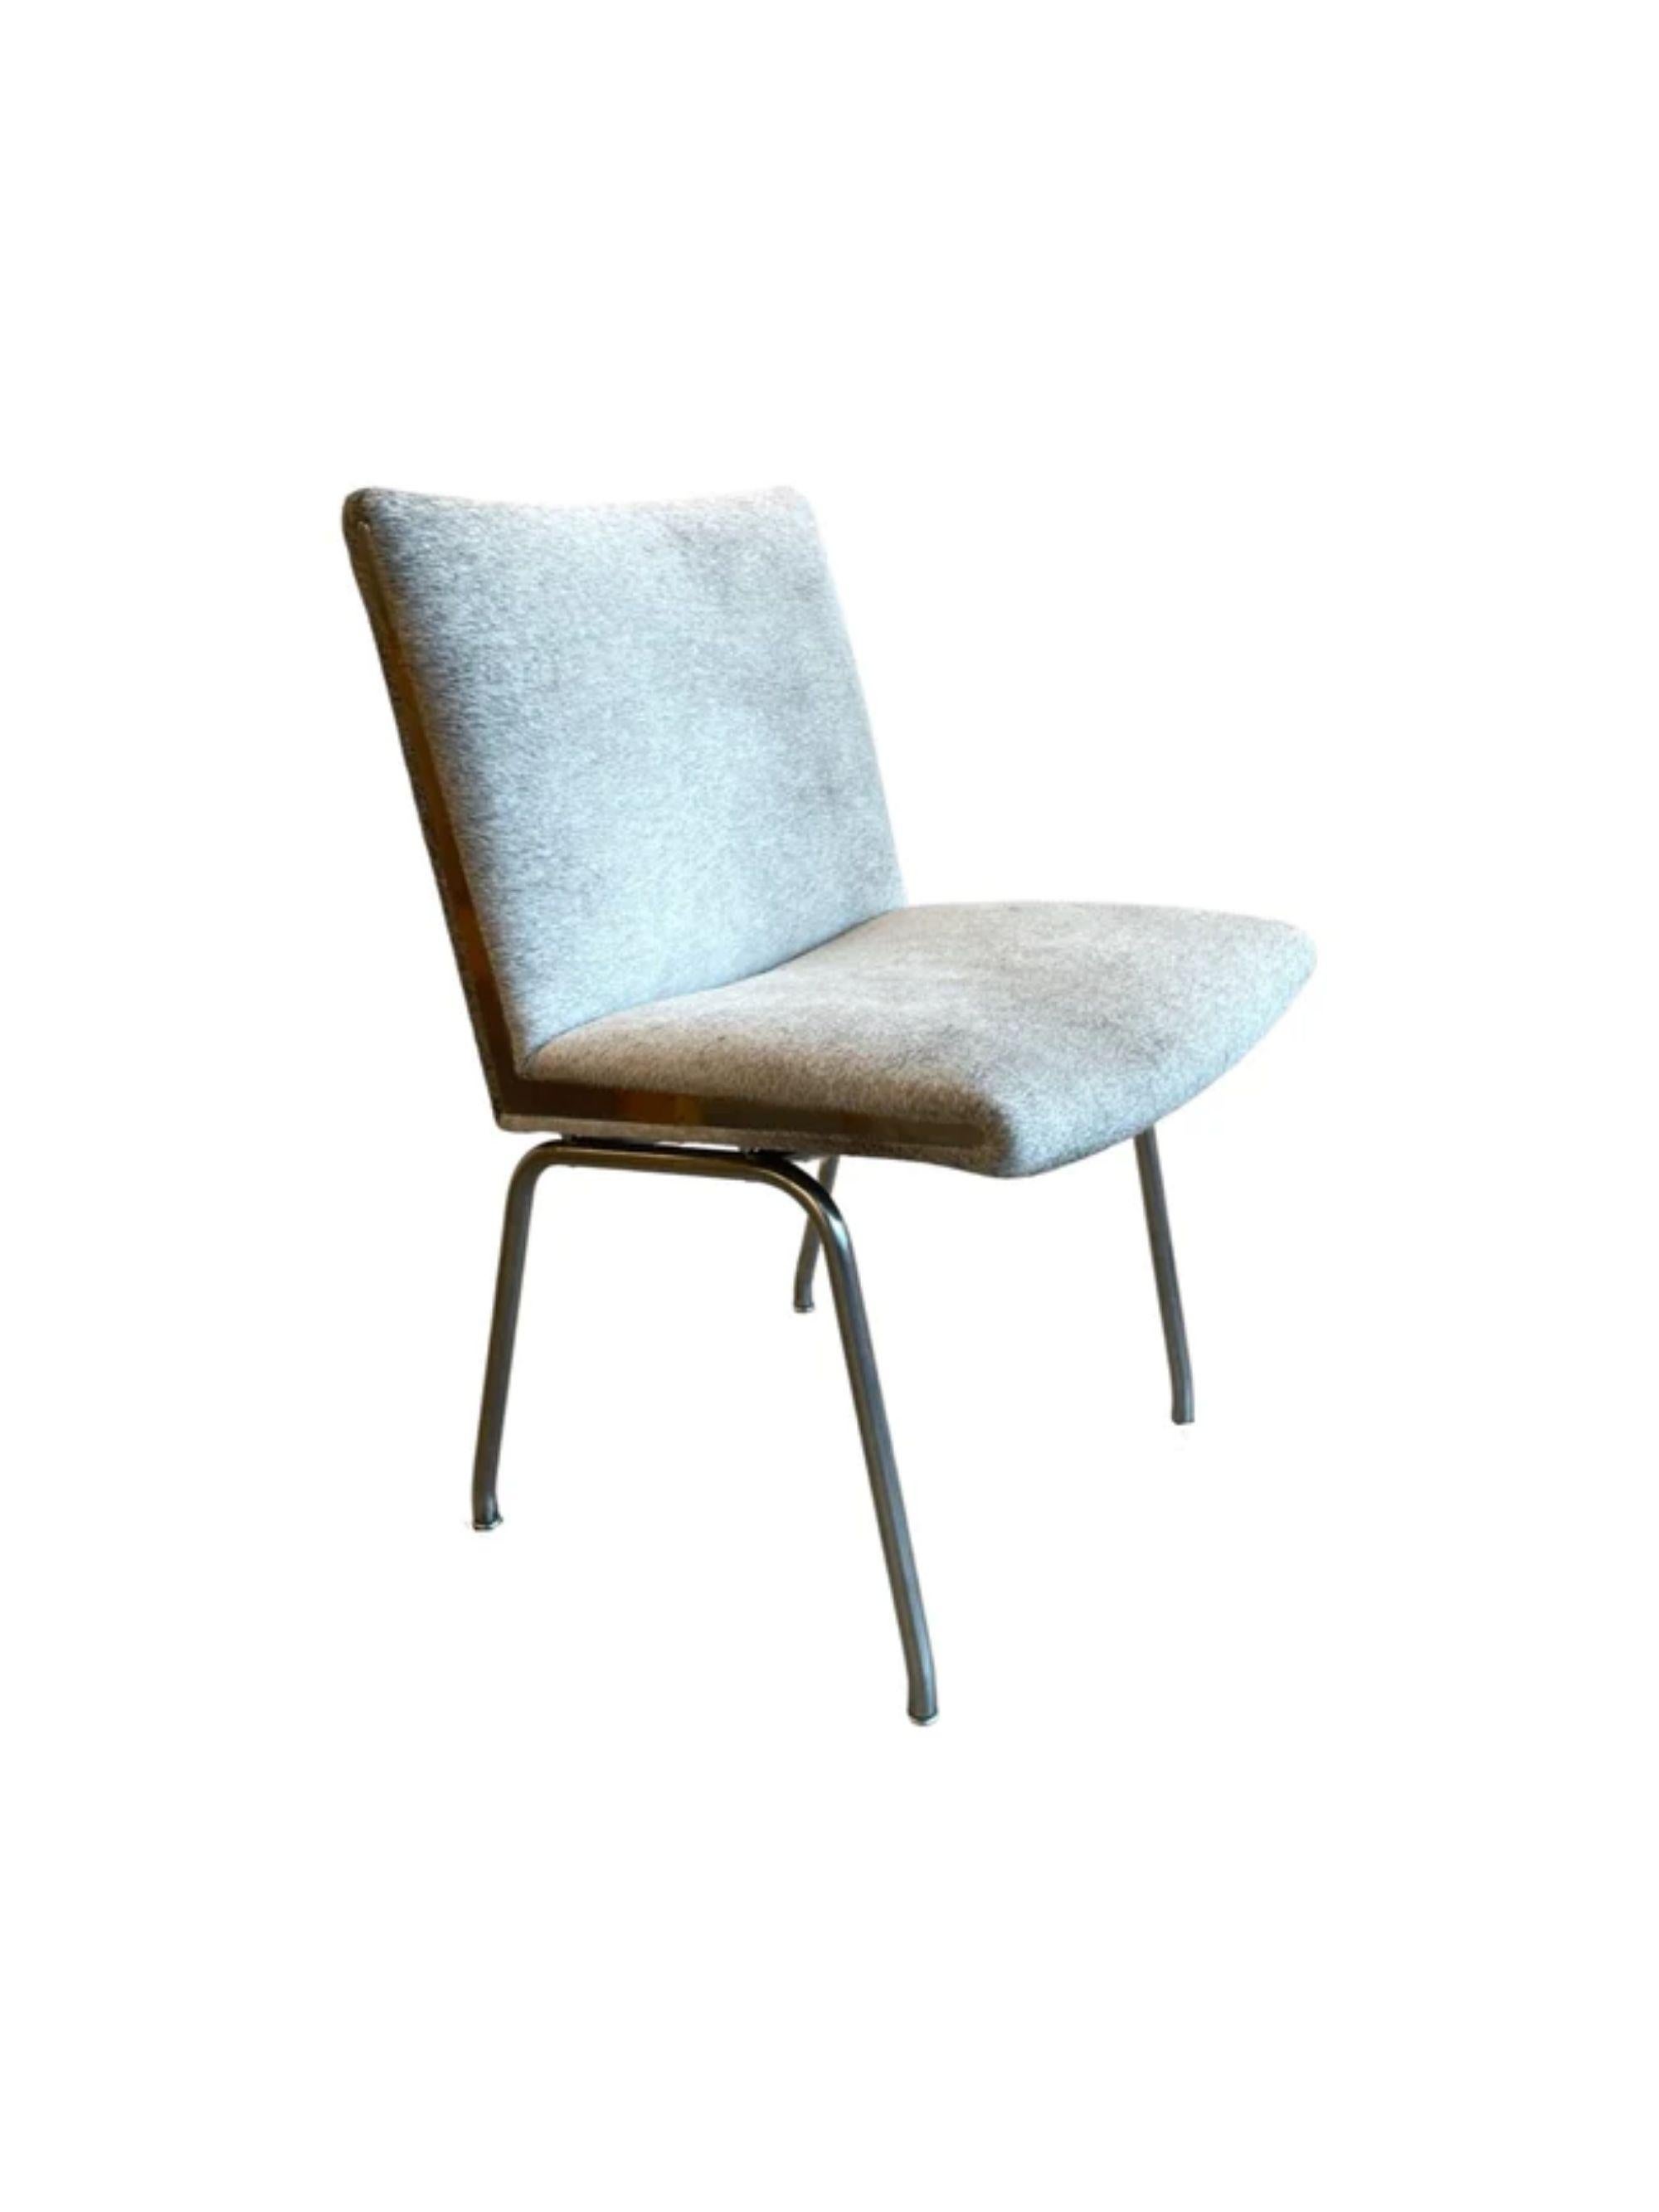 Hans Wegner model “AP38” chair for AP Stolen, Denmark, 1950s

Additional Information:
Materials: Pony hide, chrome-plated steel, steel
Dimensions: 30